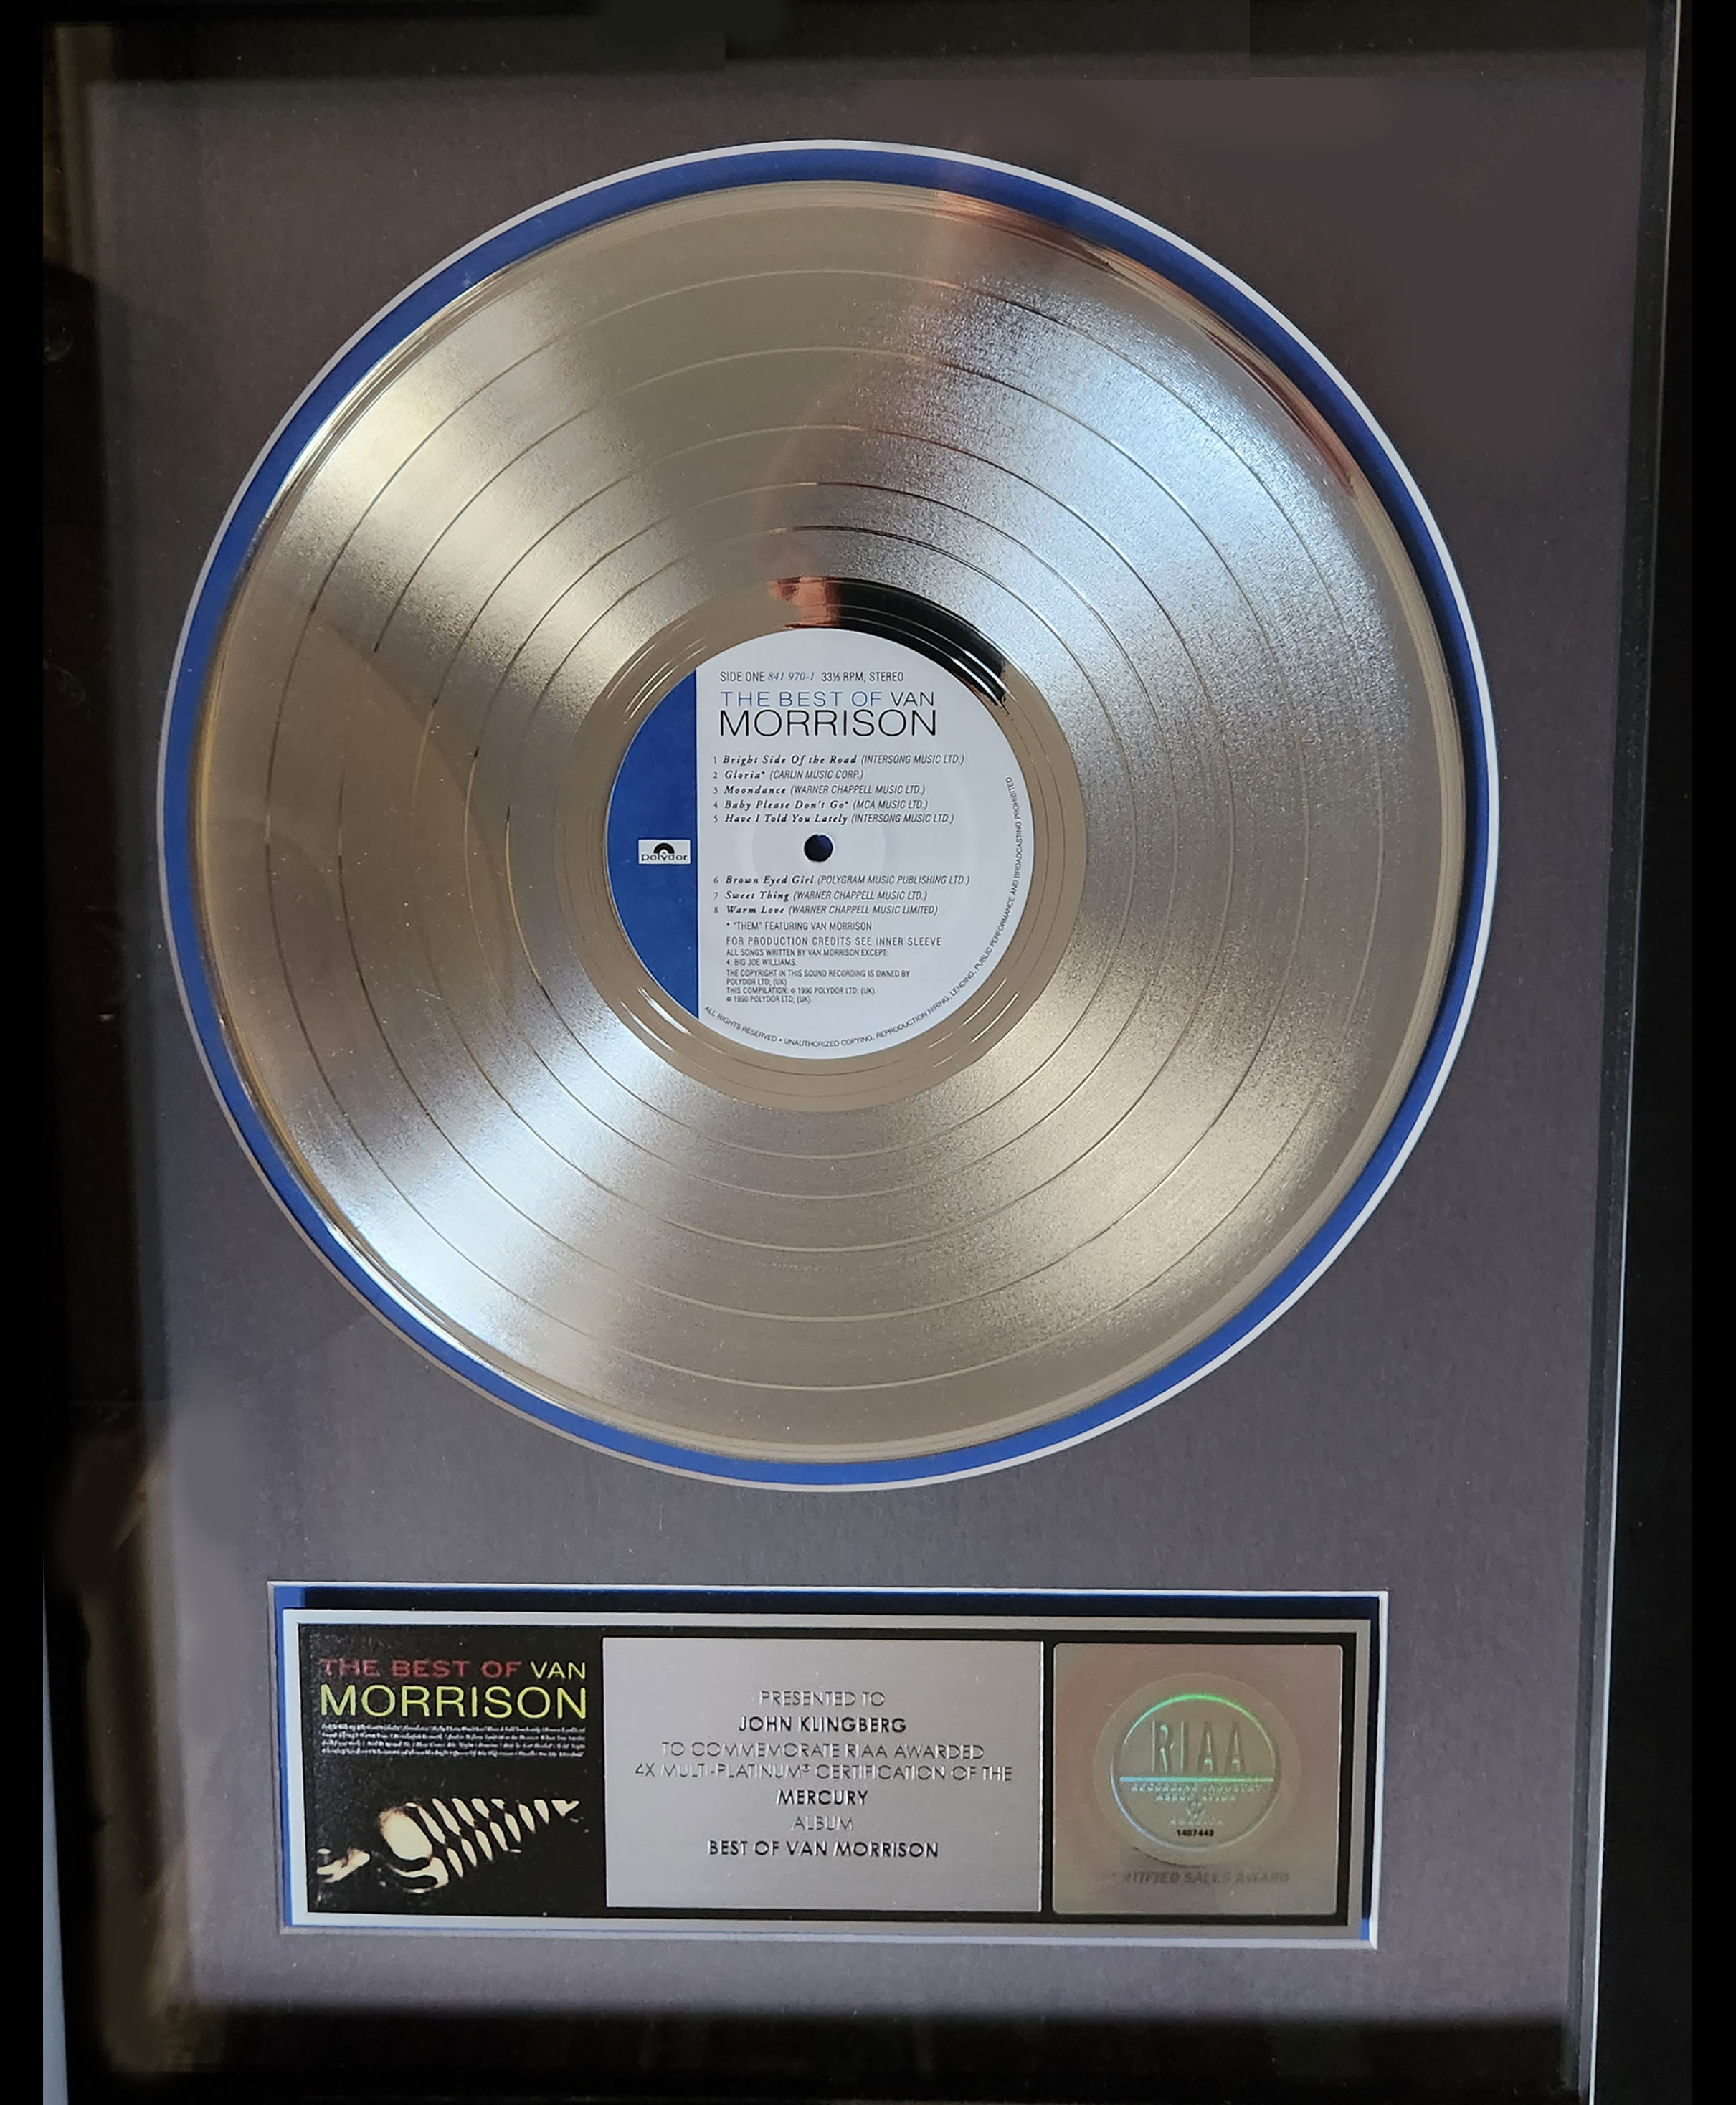 Best of Van Morrison multi-platinum sales award, 2002